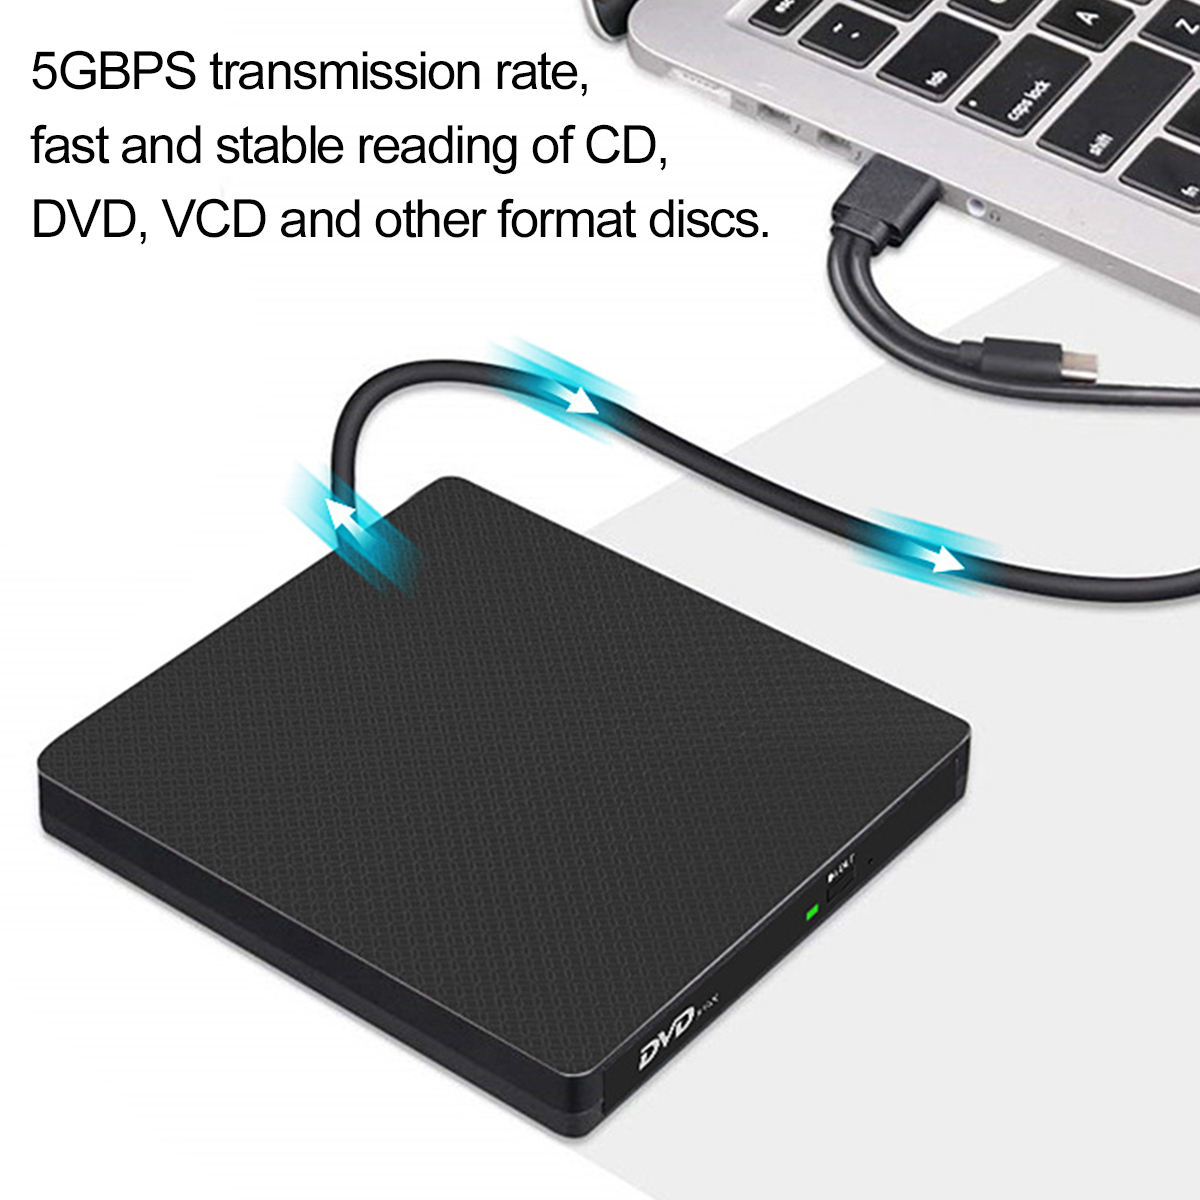 USB3.0 Type-C CD DVD External Optical Drive DVD-RW Player High Speed Data Transfer External Burner Writer Rewriter for Computer PC Laptop XD009